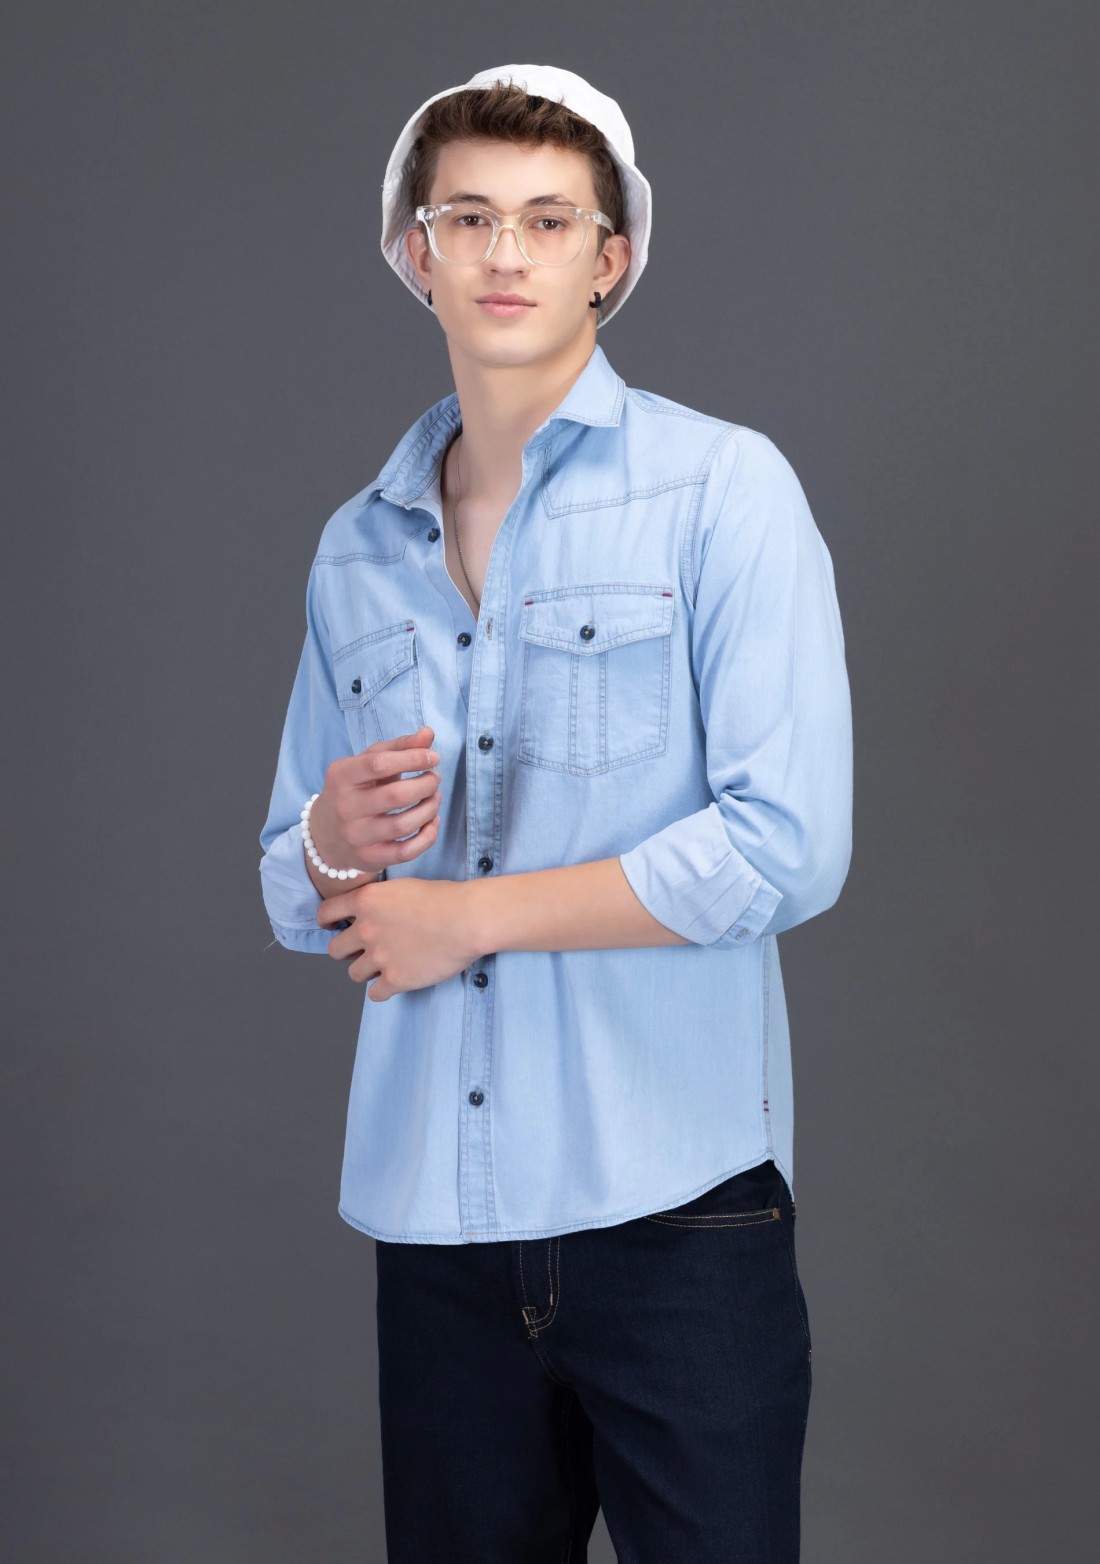 Shirt & jeans combo set for men's wear - Dwhale Hub